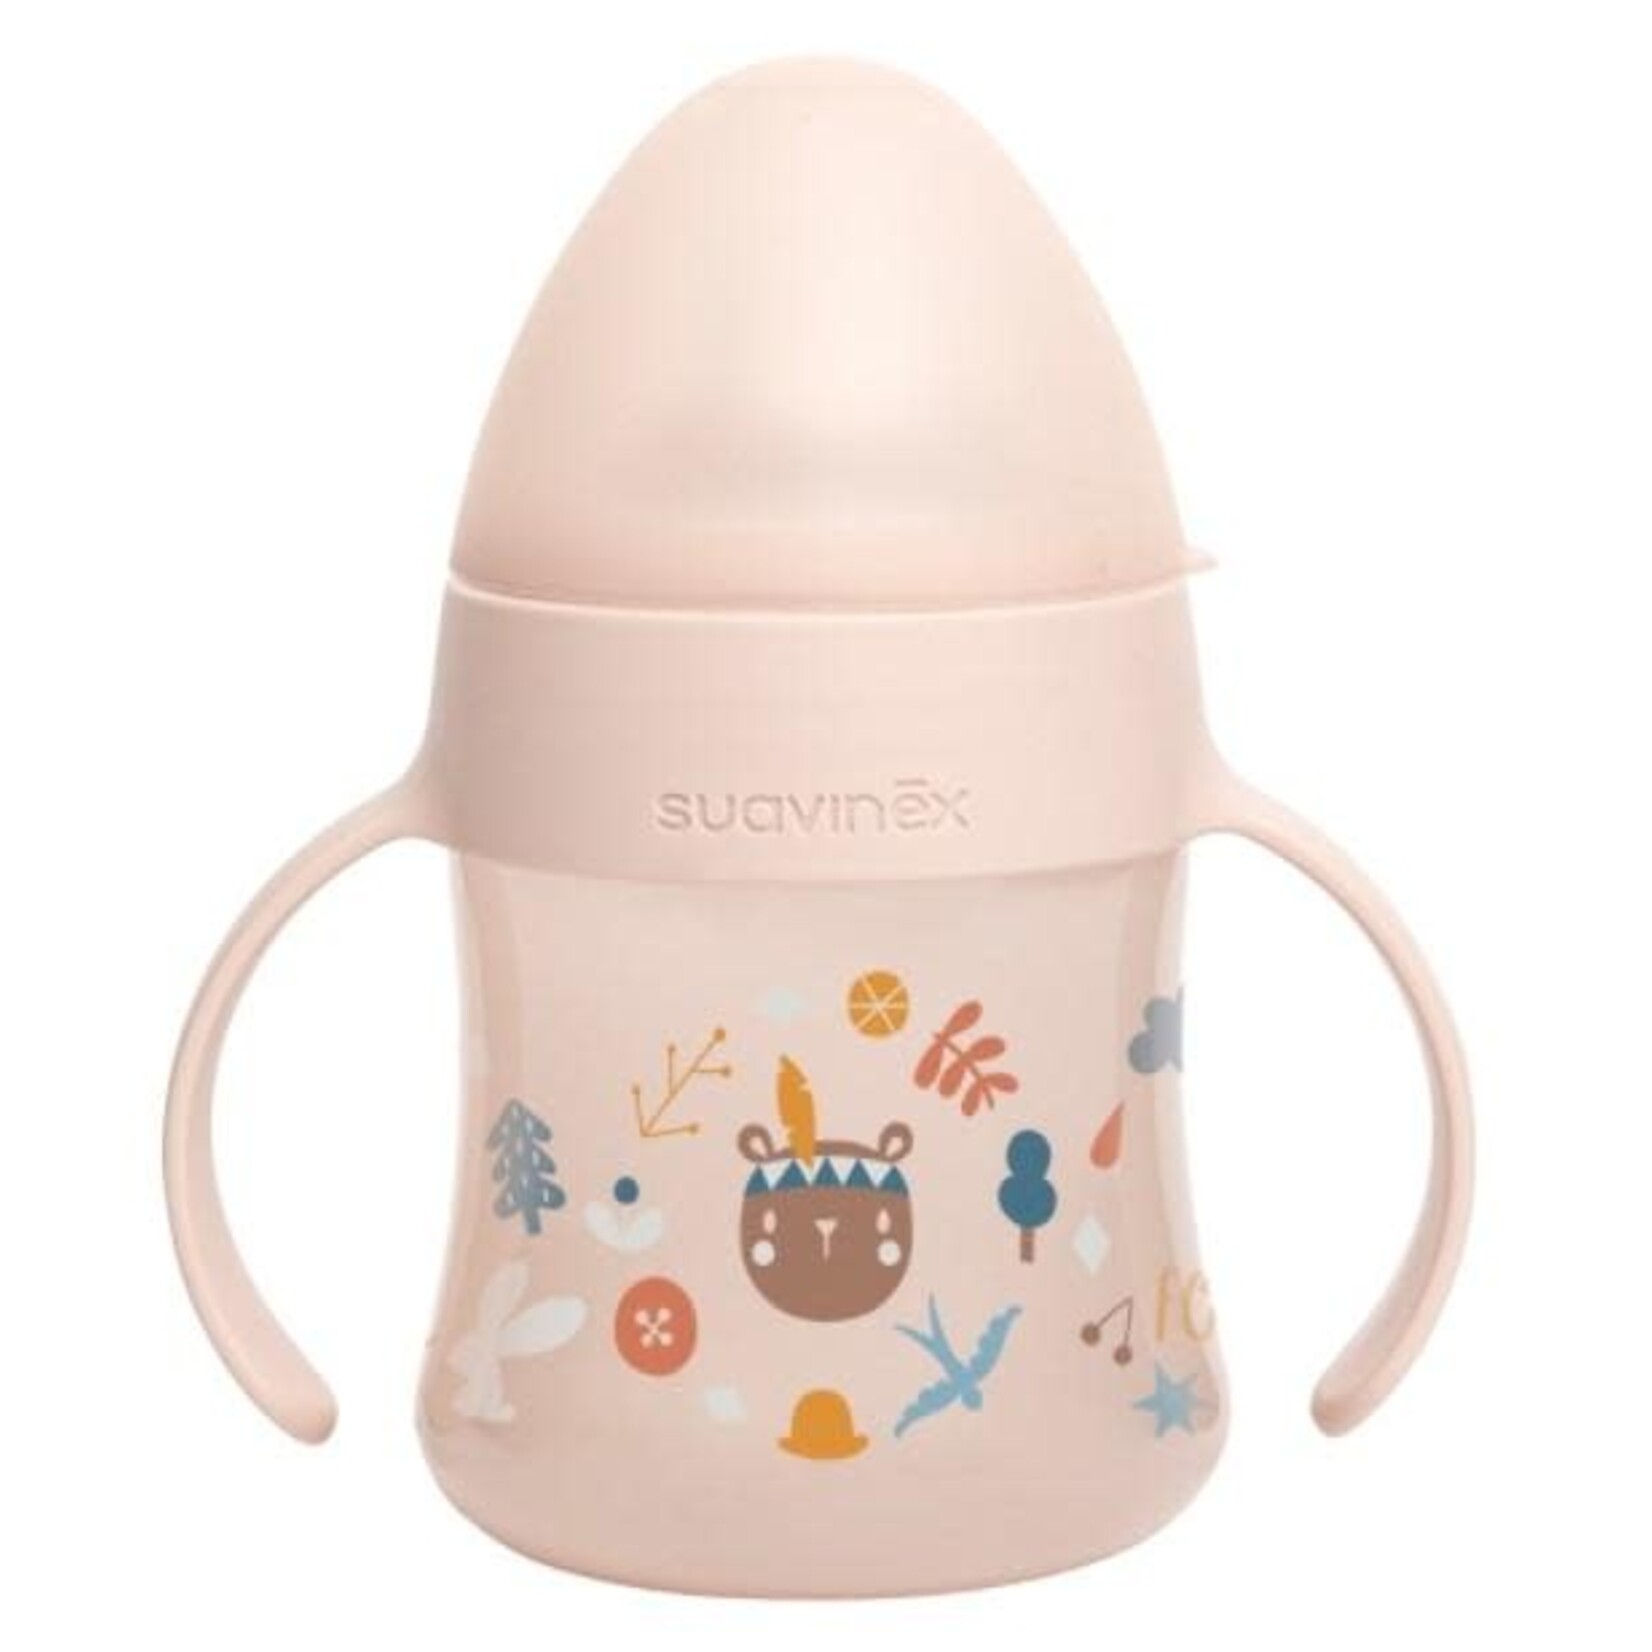 Suavinex Suavinex - FEEDING - Forest - Bottle Handles -Non Spill Spout 150ml - Pink